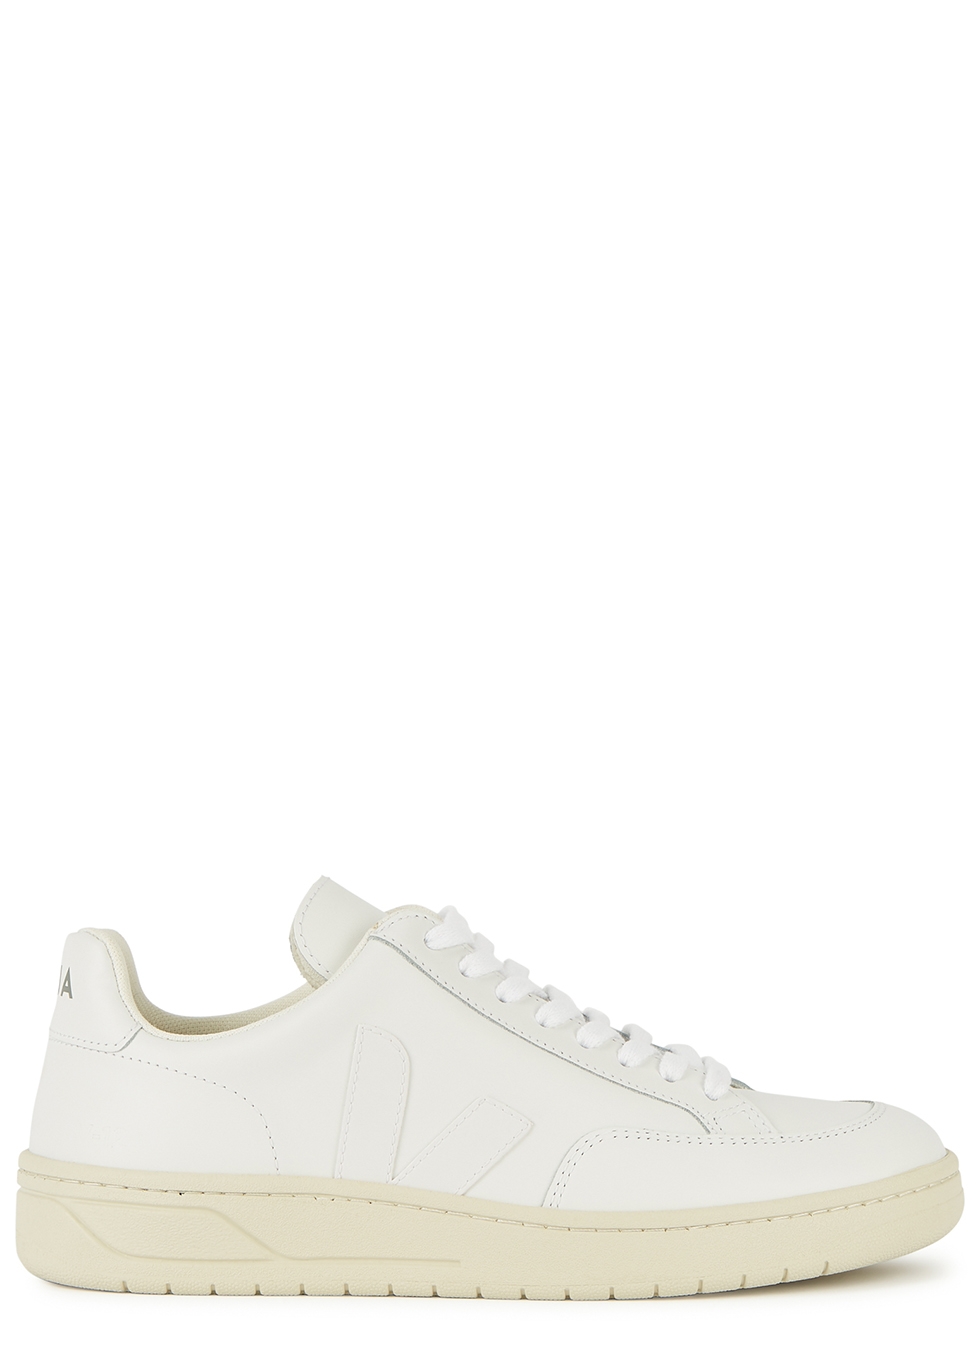 Veja V-12 white leather sneakers - Harvey Nichols